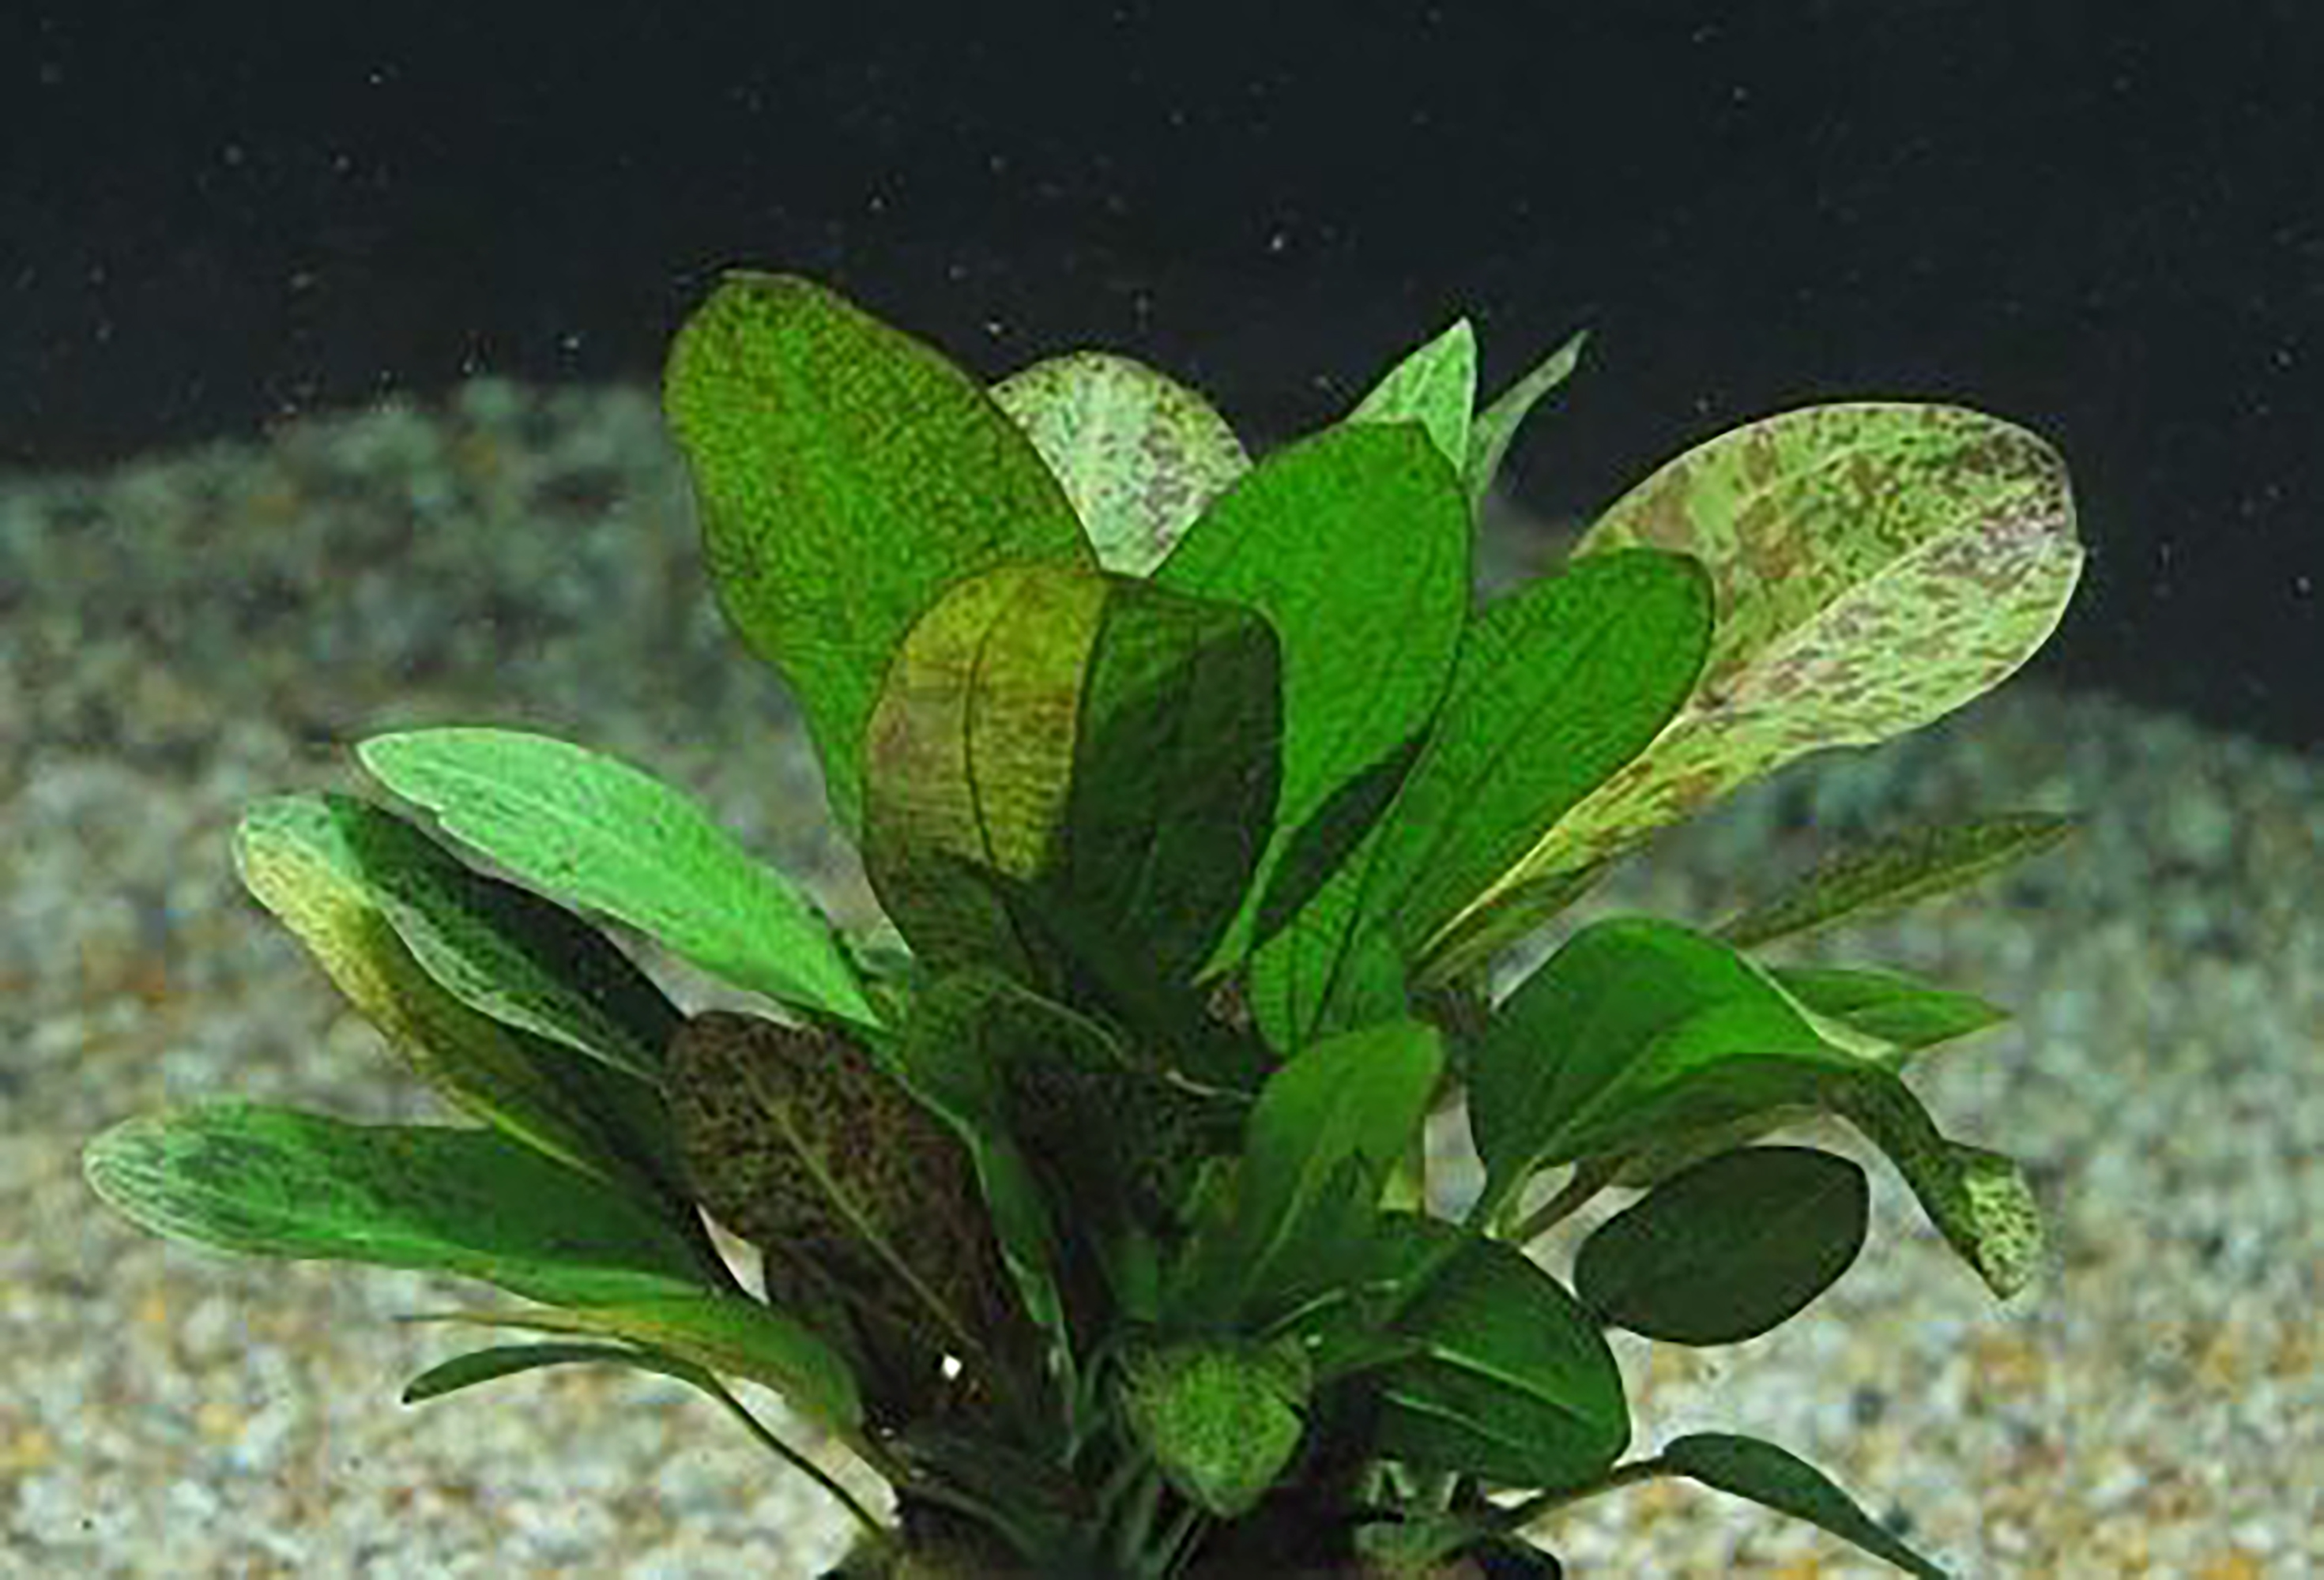 Amazon Sword Echinodorus Ozelot Red Small Live Aquarium Plants BUY2 GET1 FREE - image 4 of 8